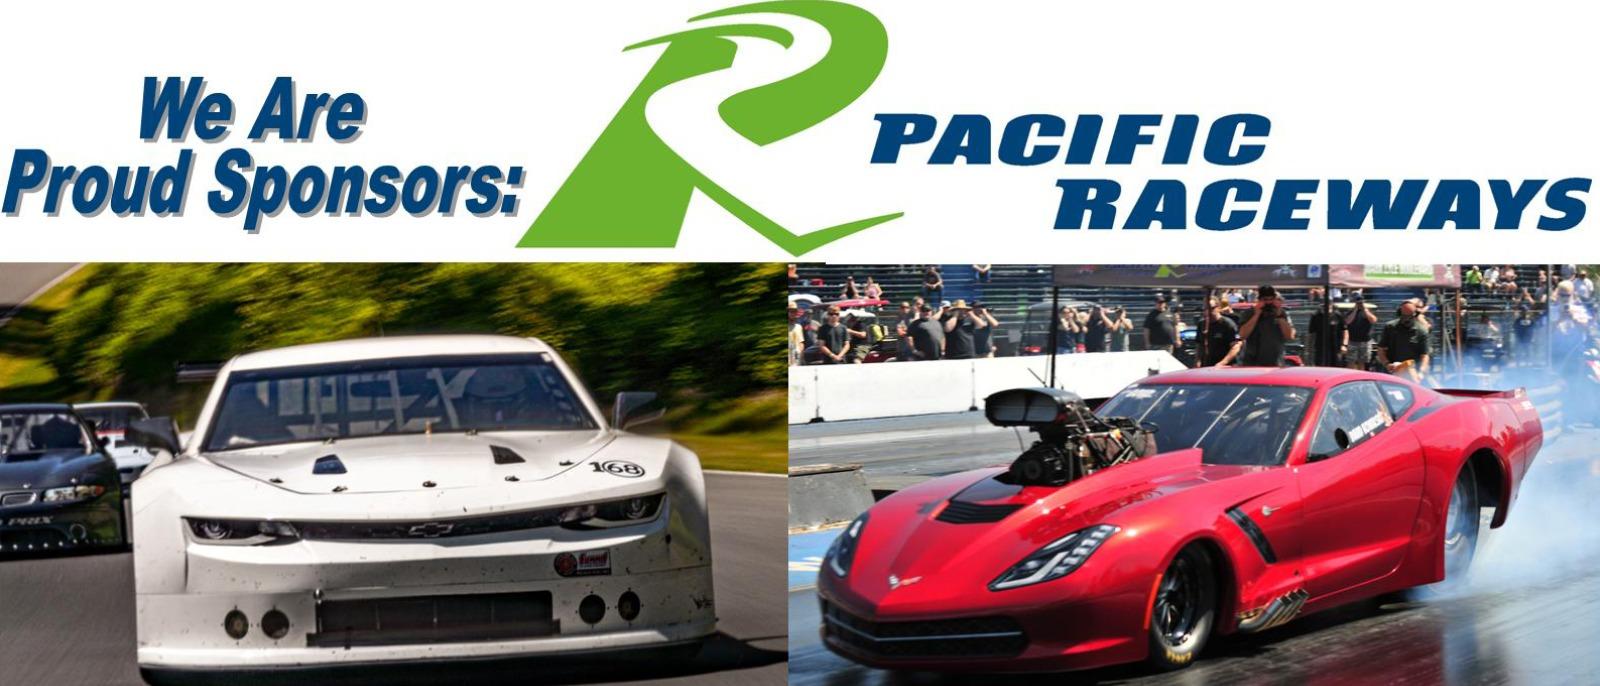 Proud Sponsors of Pacific Raceways